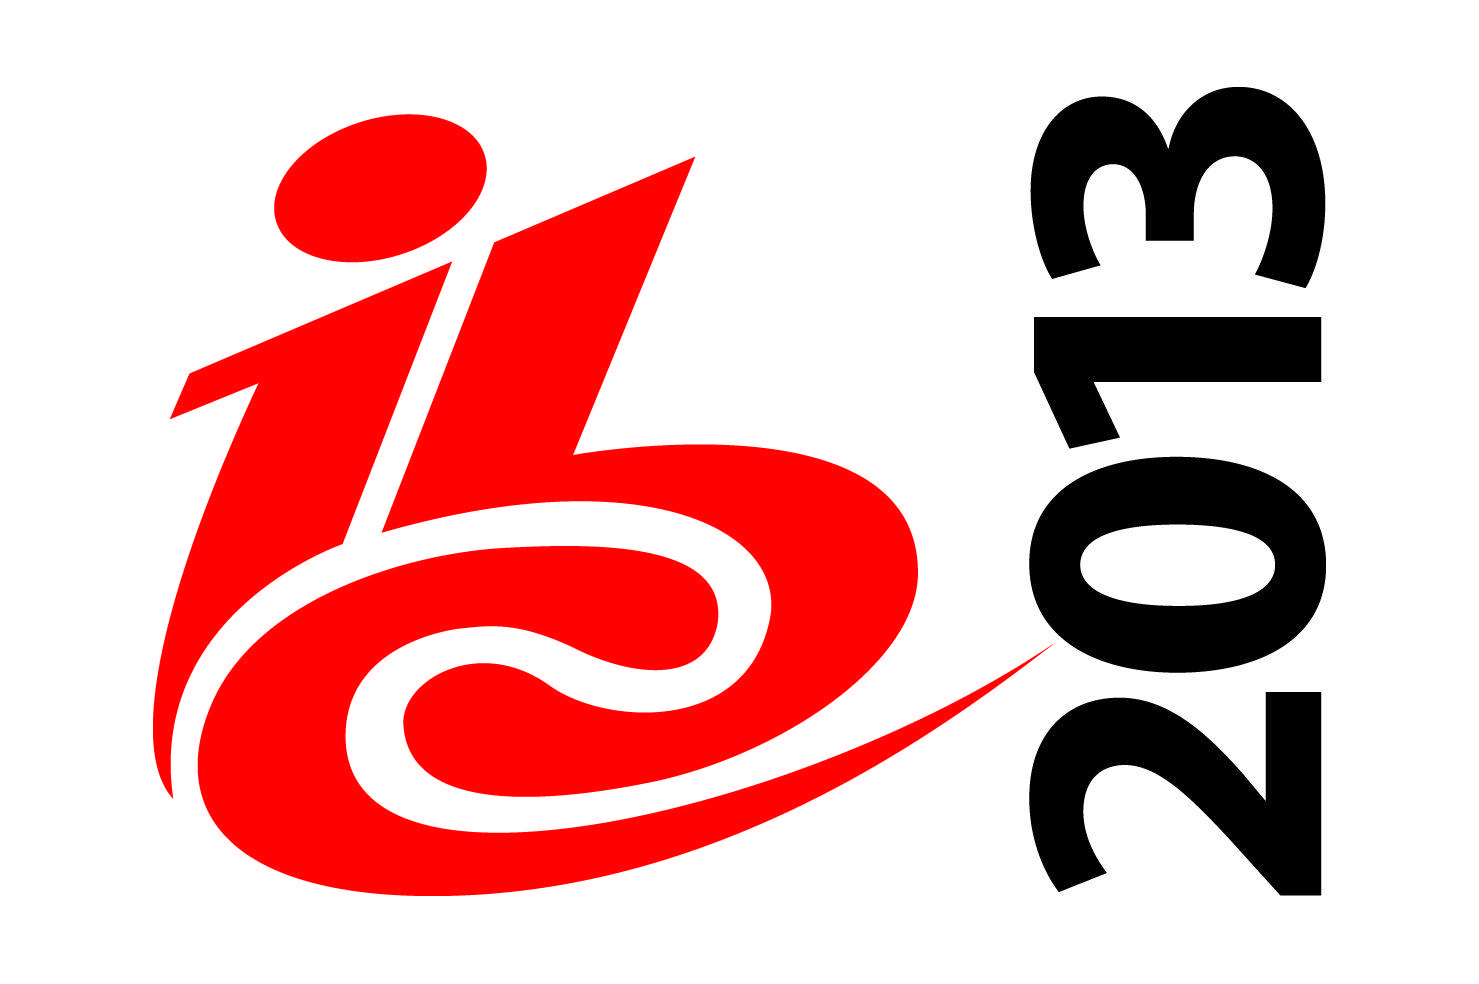 2013 Logo - 2013 logo cmyk - Newsshooter